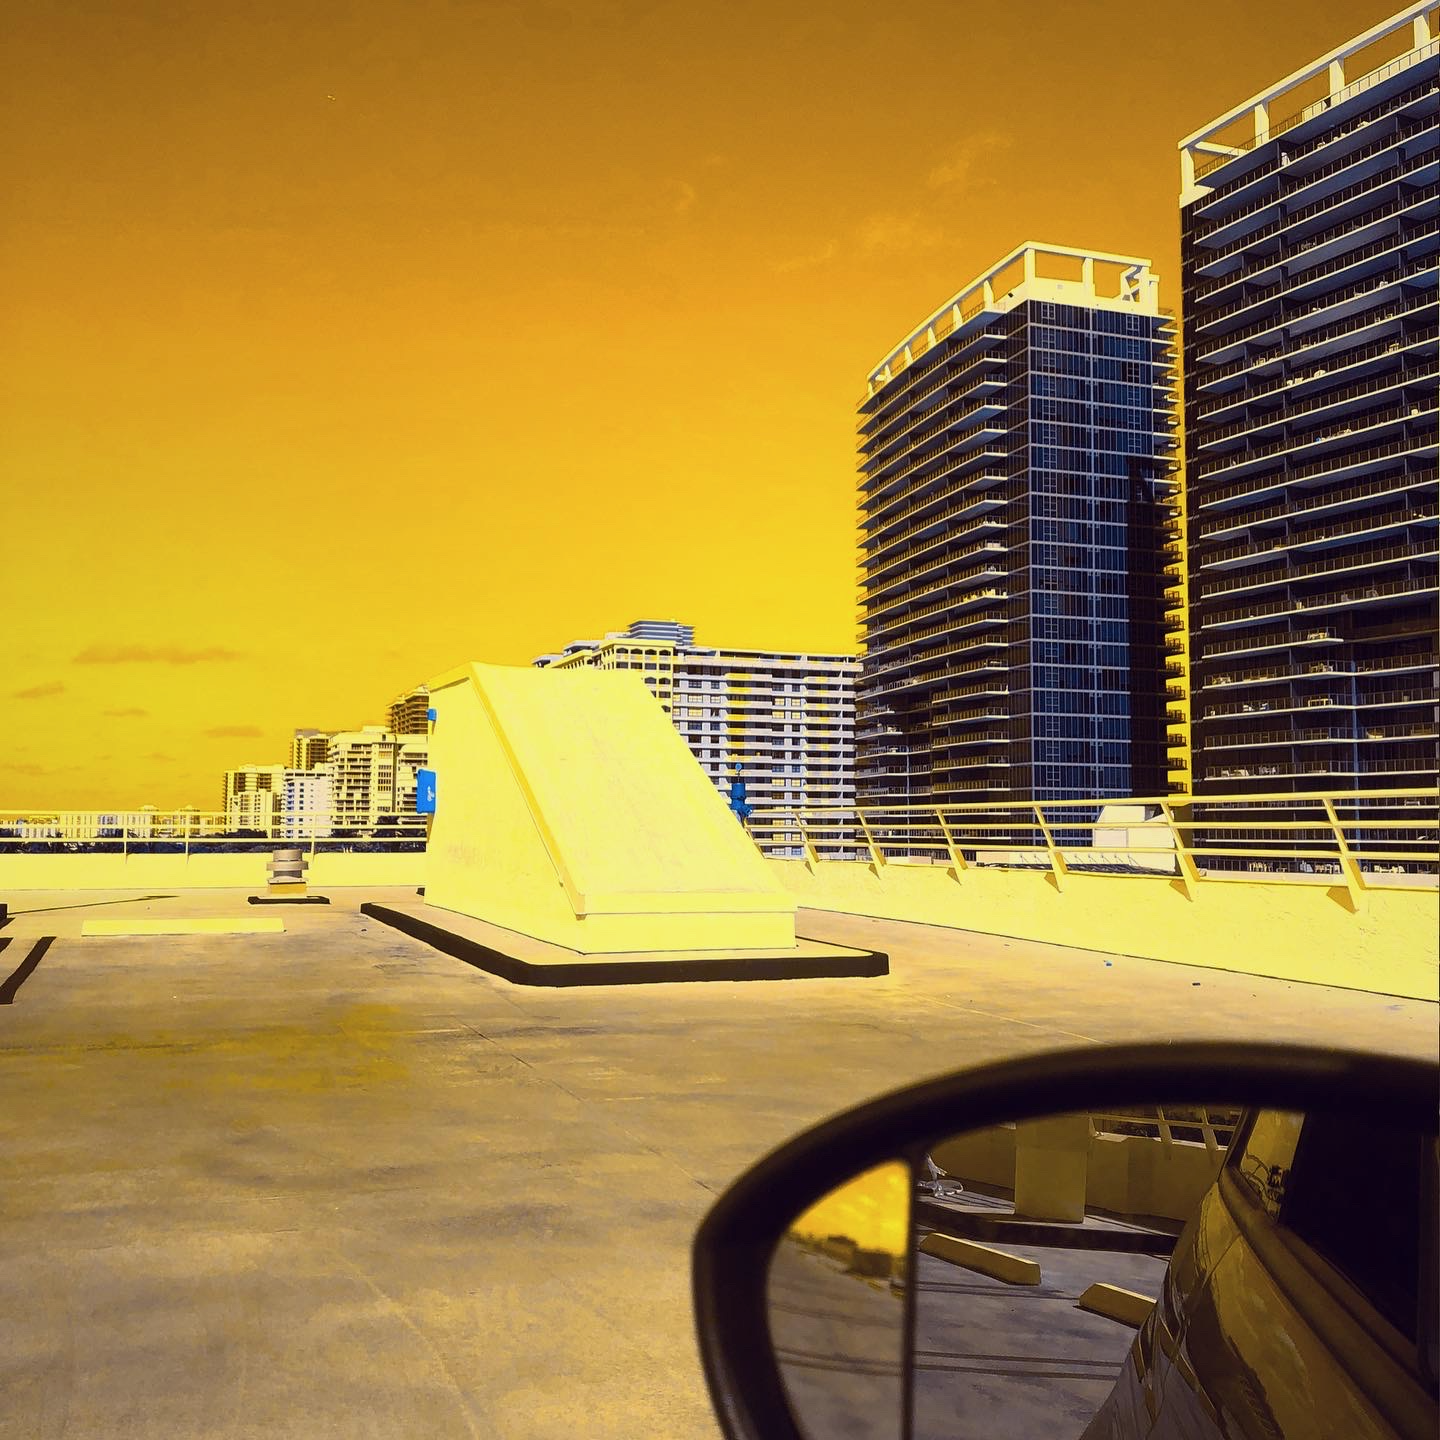 Open rooftop parking garage overlooking skyscrapers. Camera captured the driver-side’s mirror—yellow aesthetic.